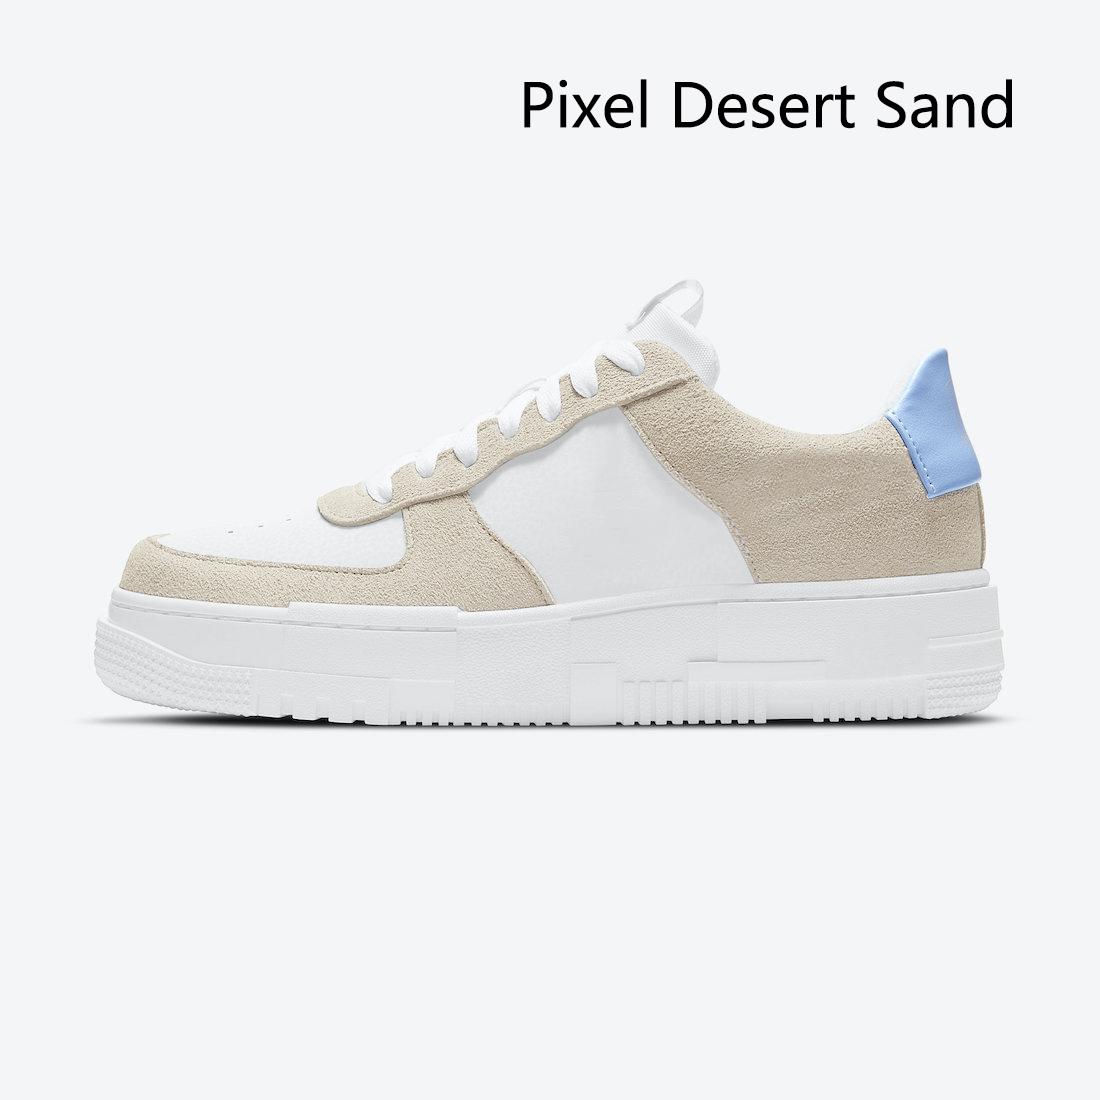 Pixel Gold Chain Low Running Shoes Desert Sand Fresh Silver Salmon Heel Sail Tan Snake High Quality